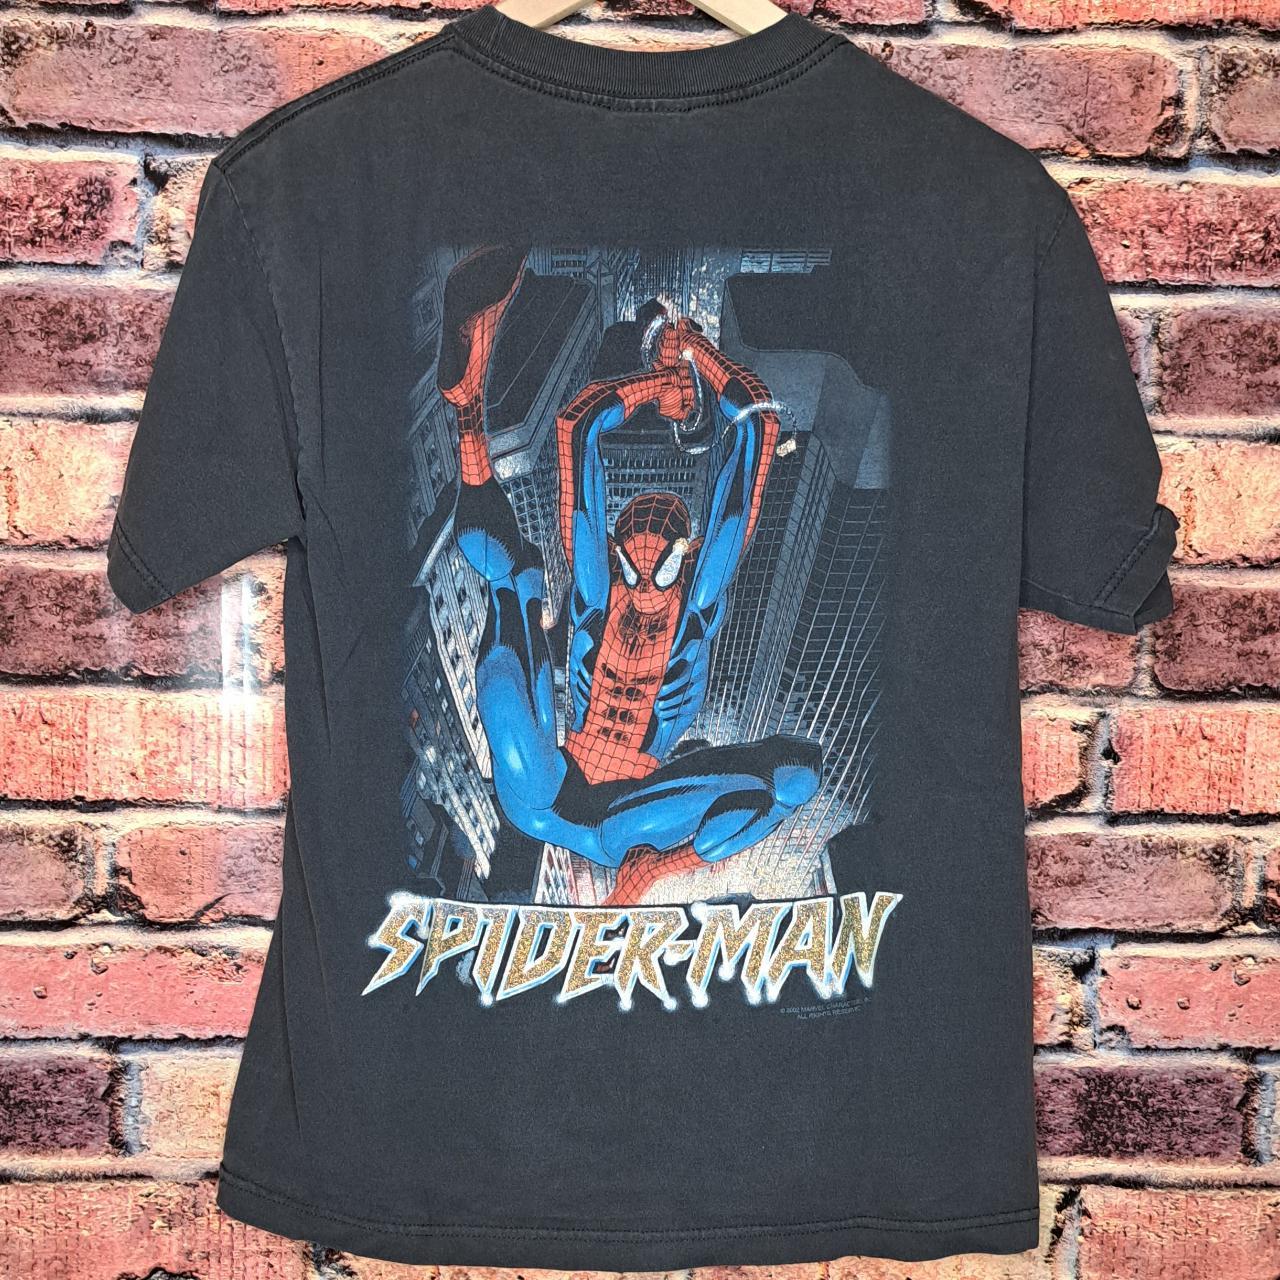 2002 Mad Engine Spiderman Marvel t shirt Size M 19''... - Depop